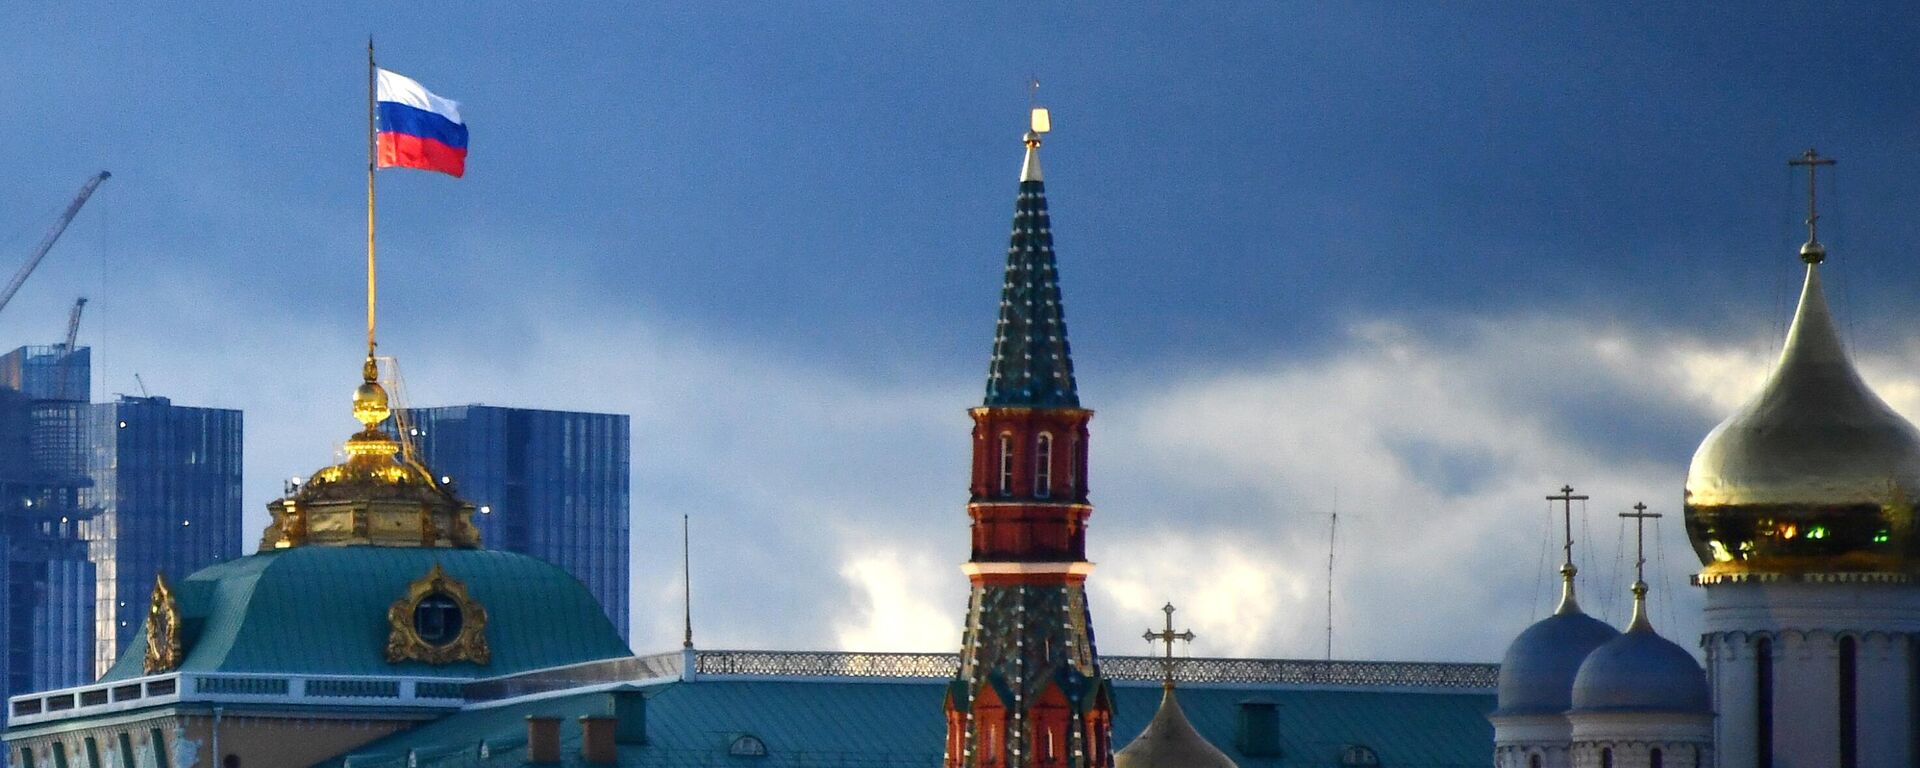 Kremlin, Moscow - Sputnik International, 1920, 21.11.2021